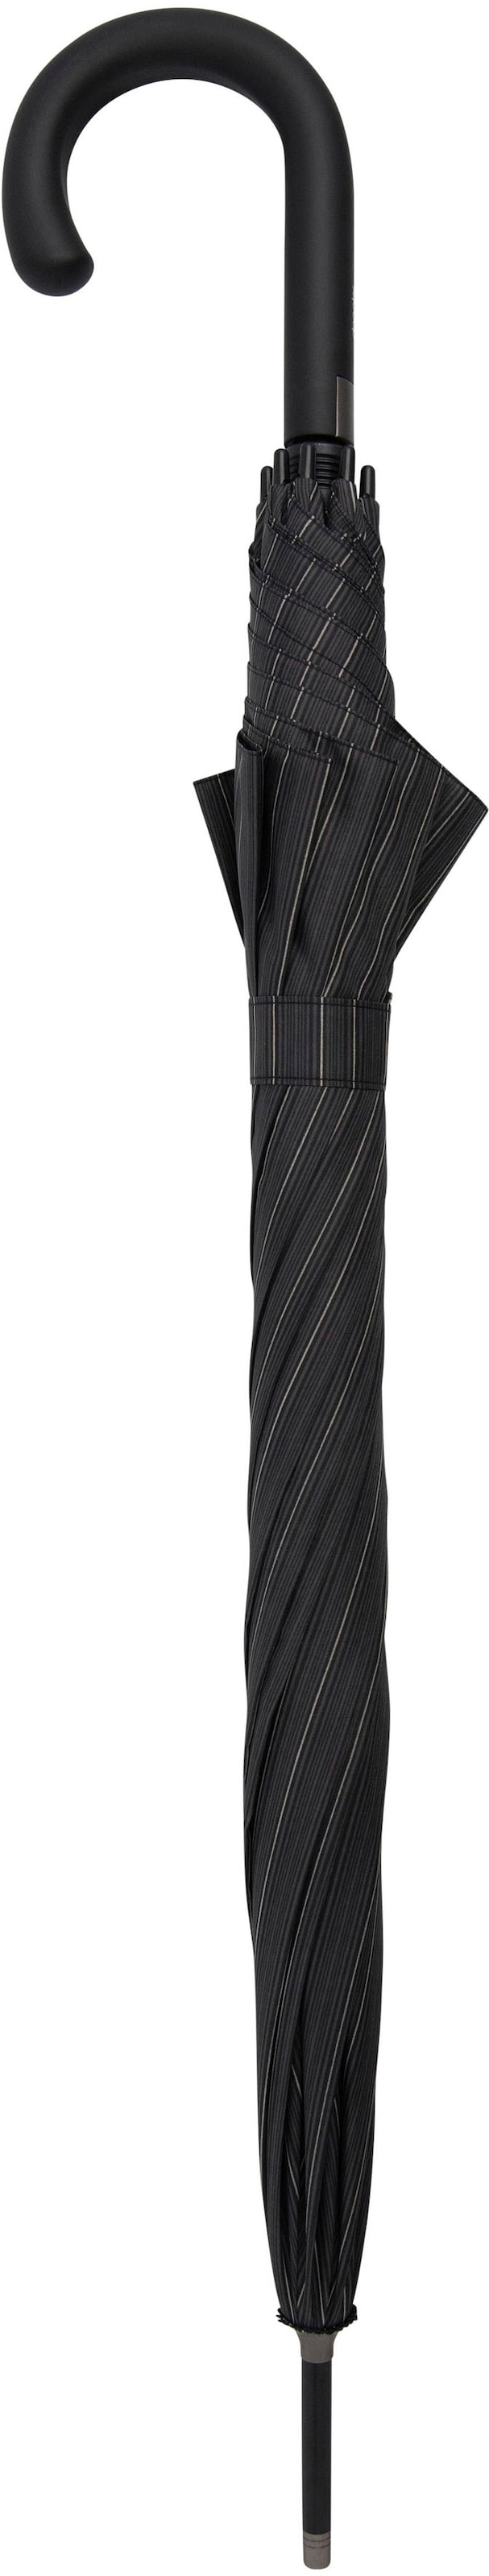 Flex stripe«, Black | Langregenschirm Friday BAUR Partnerschirm doppler® »Fiber classy Big AC